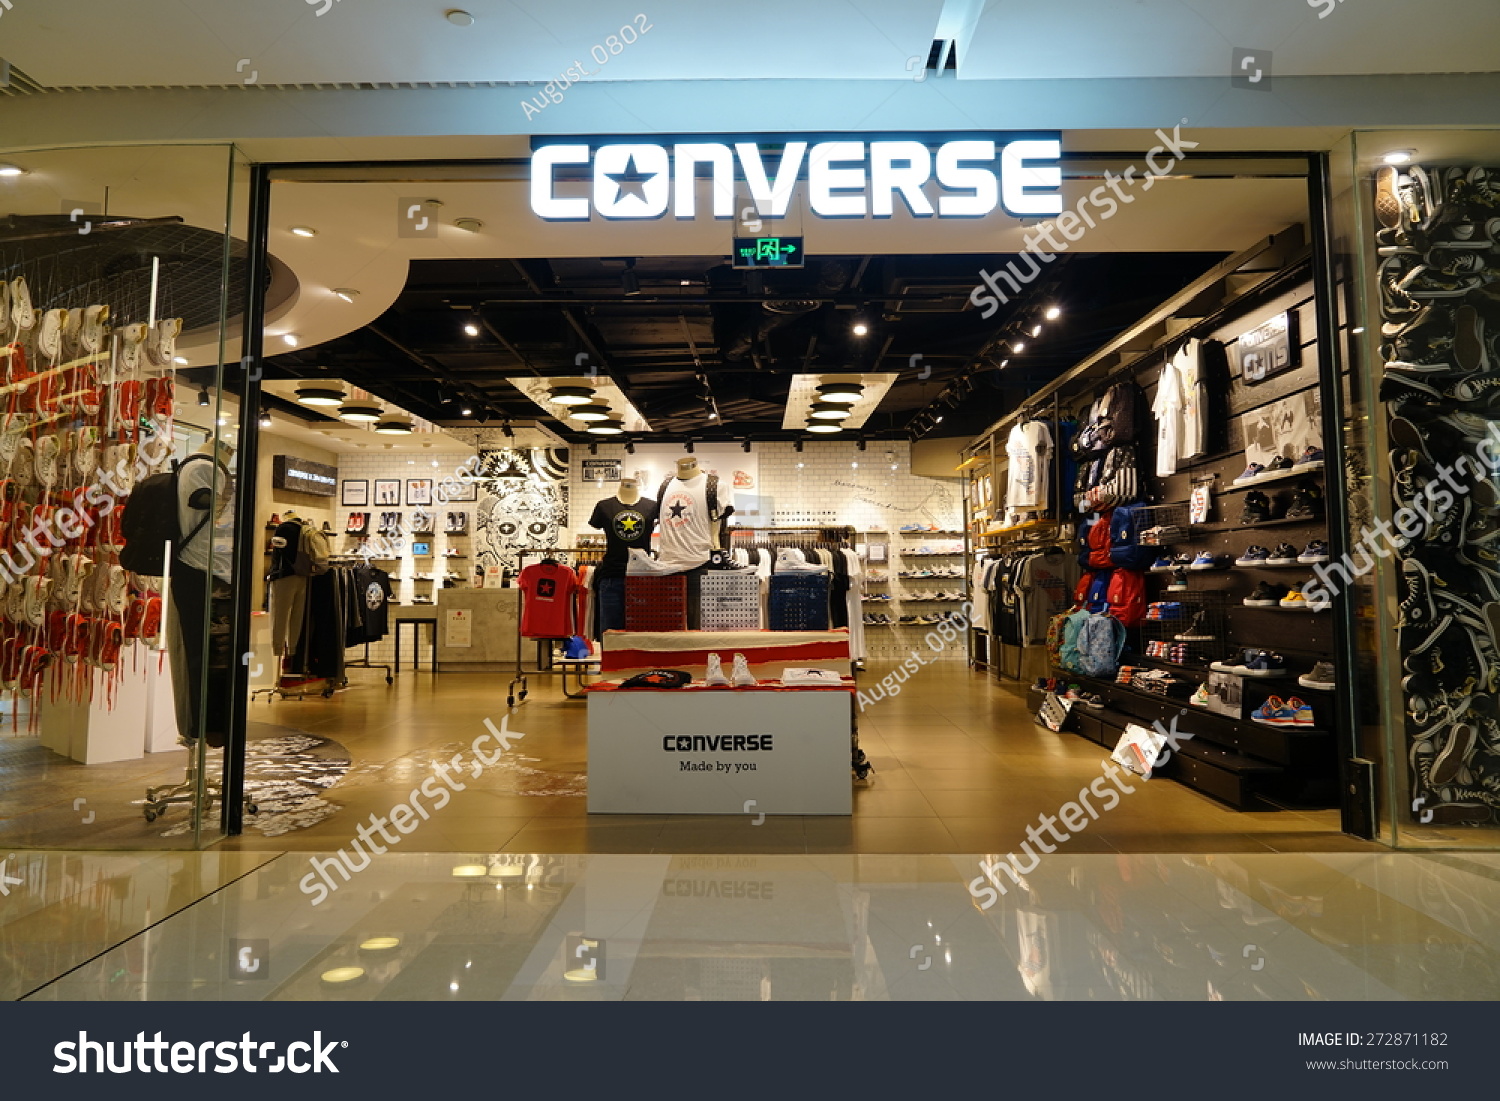 converse mall